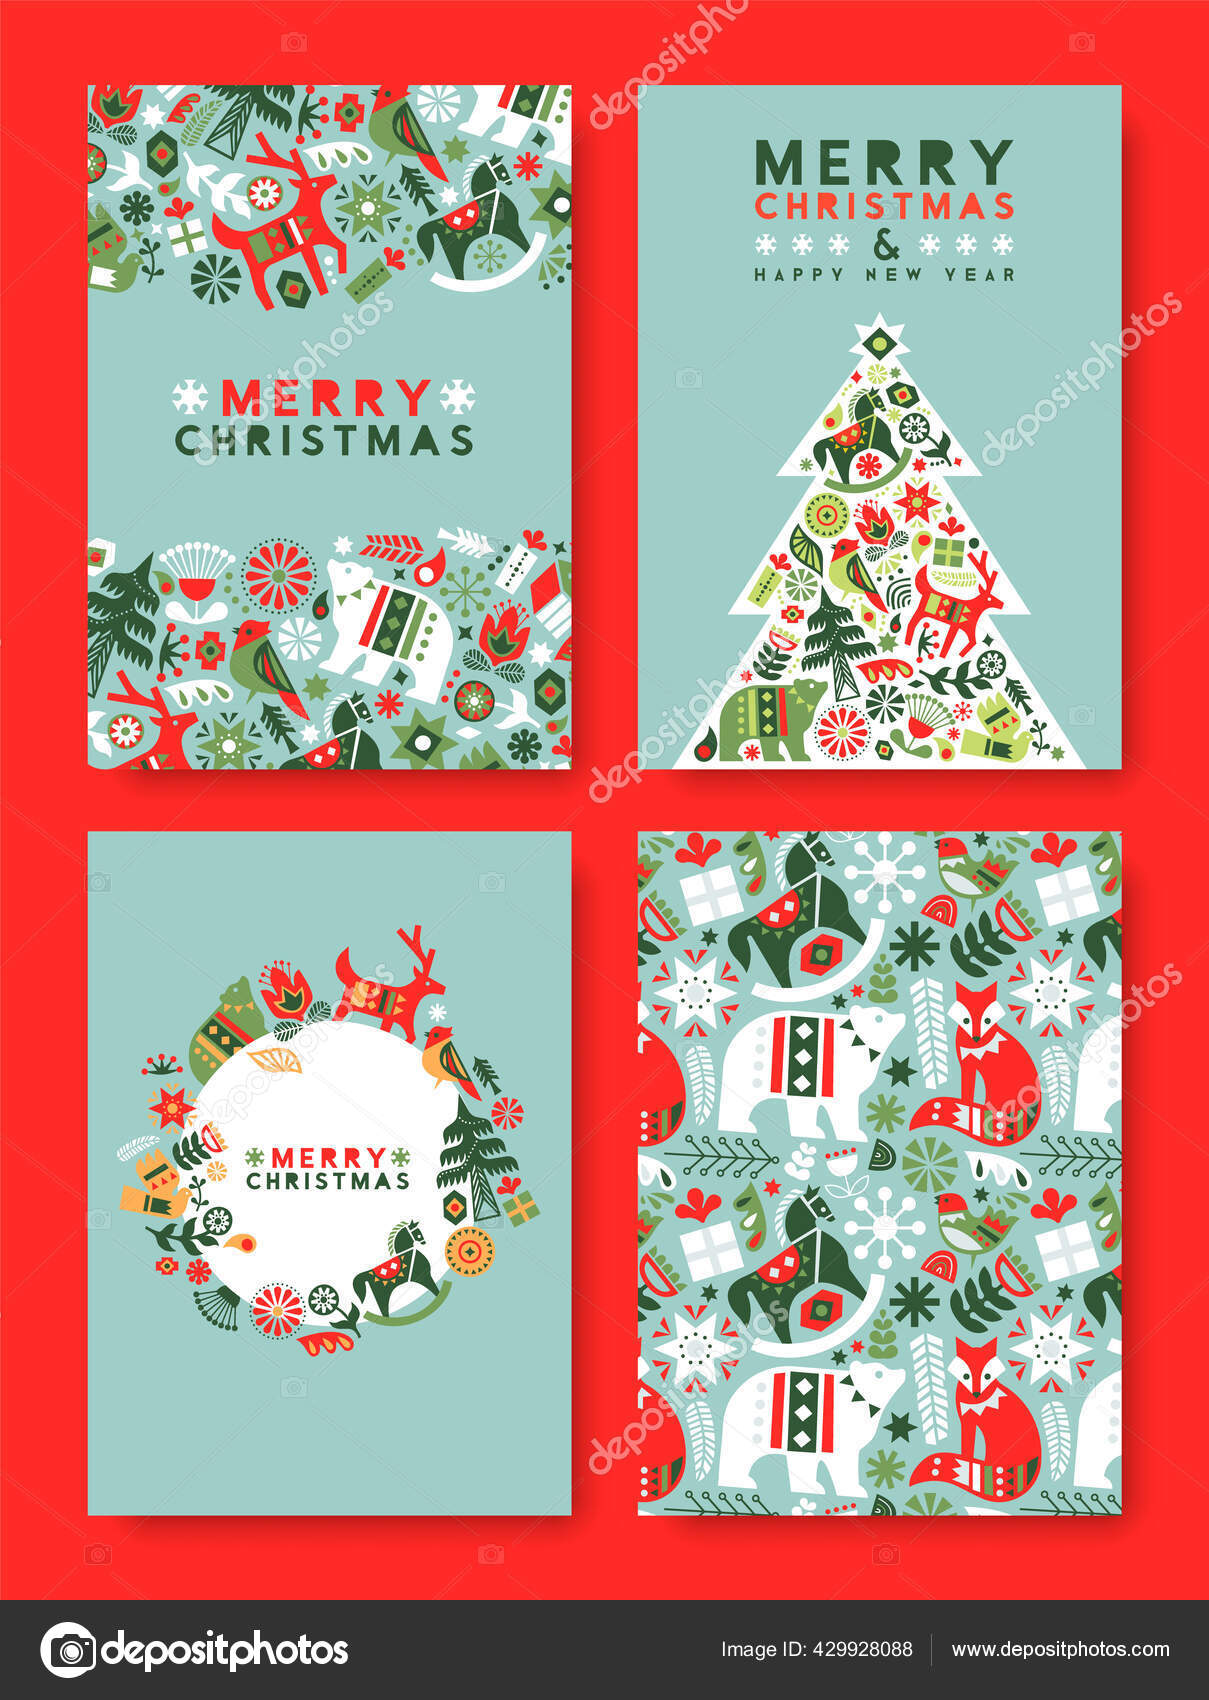 https://st2.depositphotos.com/1005738/42992/v/1600/depositphotos_429928088-stock-illustration-merry-christmas-happy-new-year.jpg